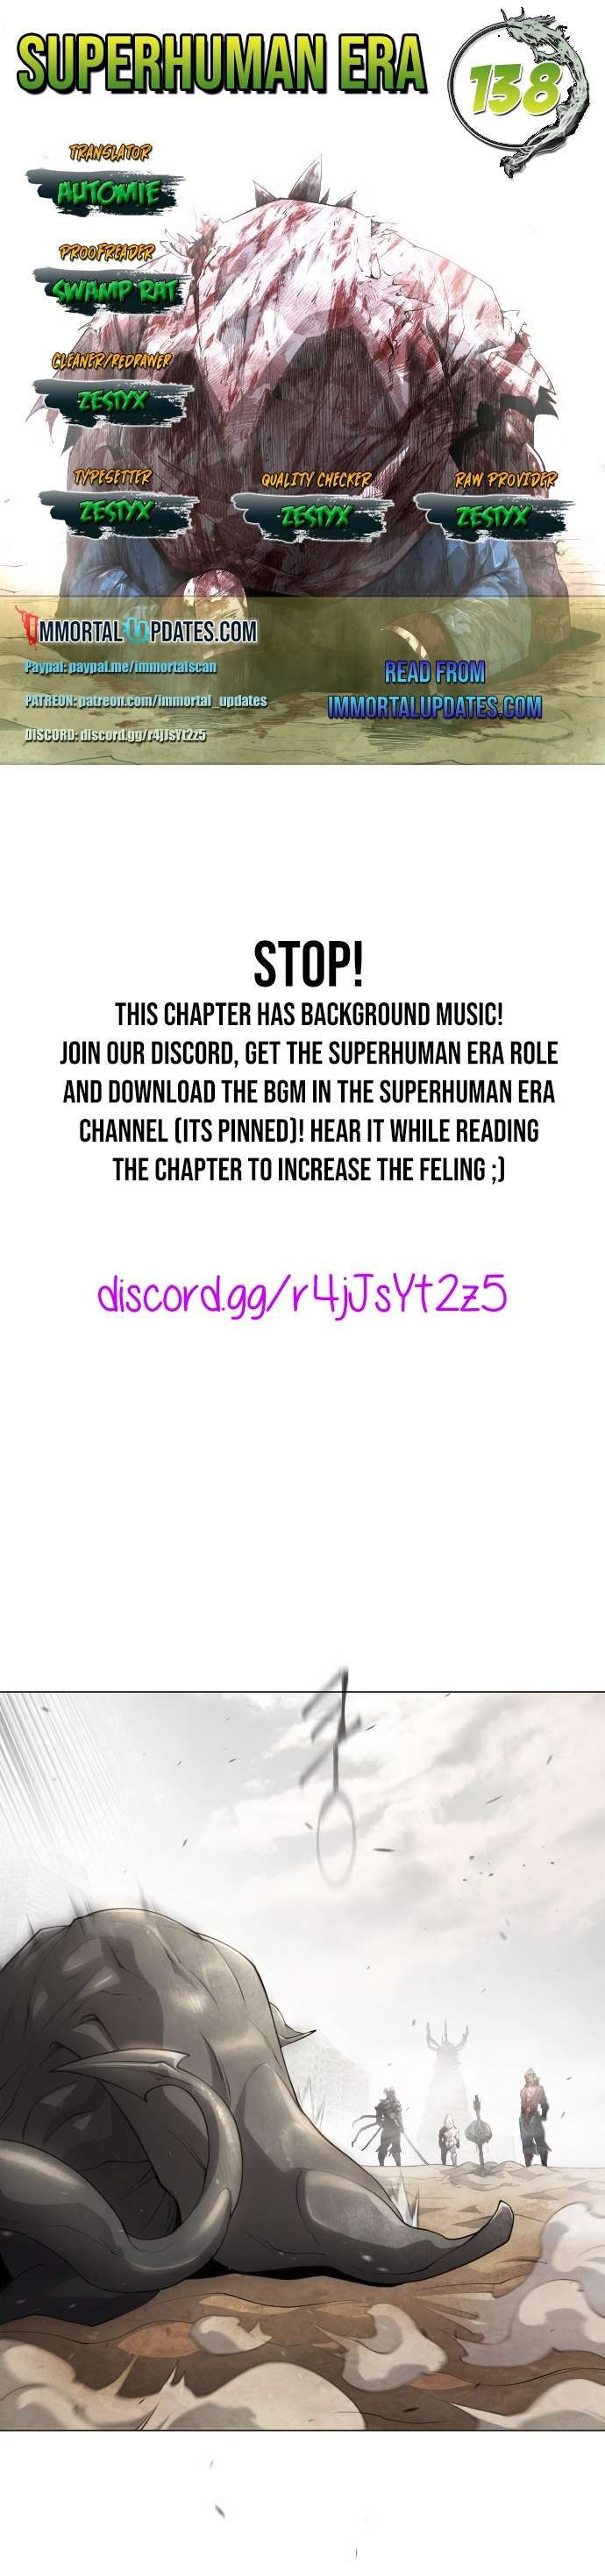 Superhuman Era Chapter 138 page 1